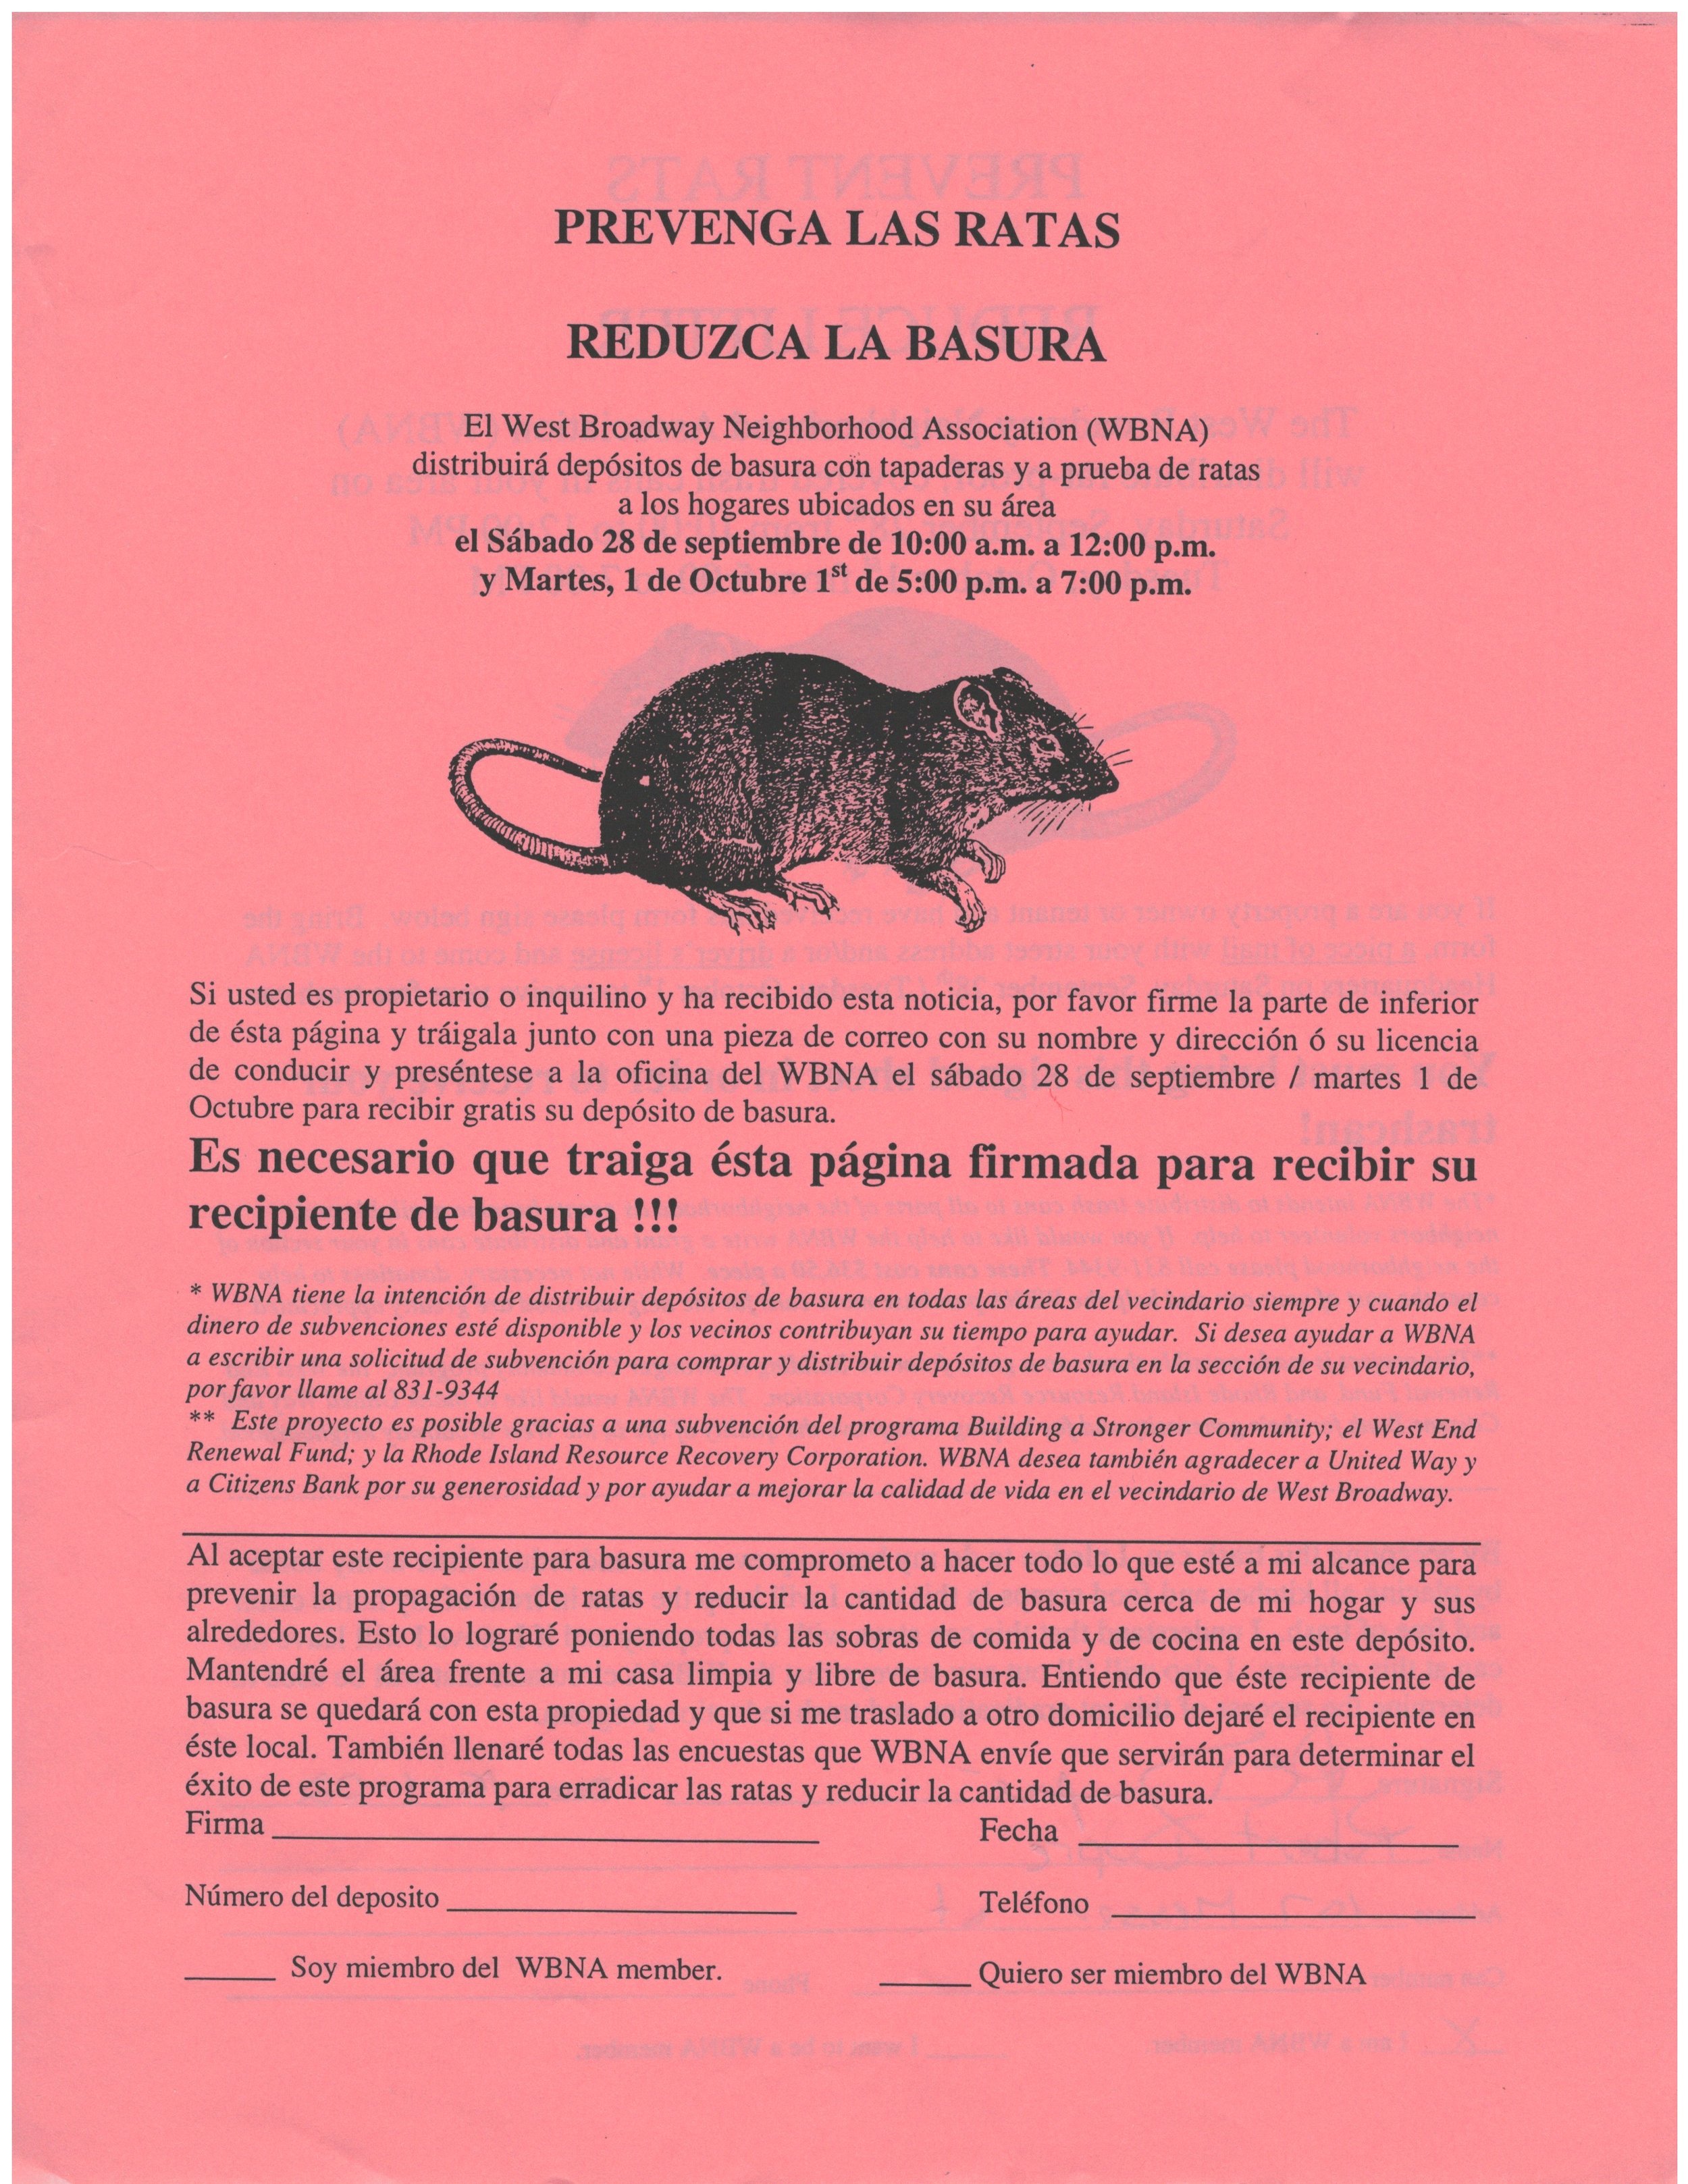  Rat-O-Rama volunteers went door to door distributing multi-lingual flyers and sign up forms to neighbors (2002) 